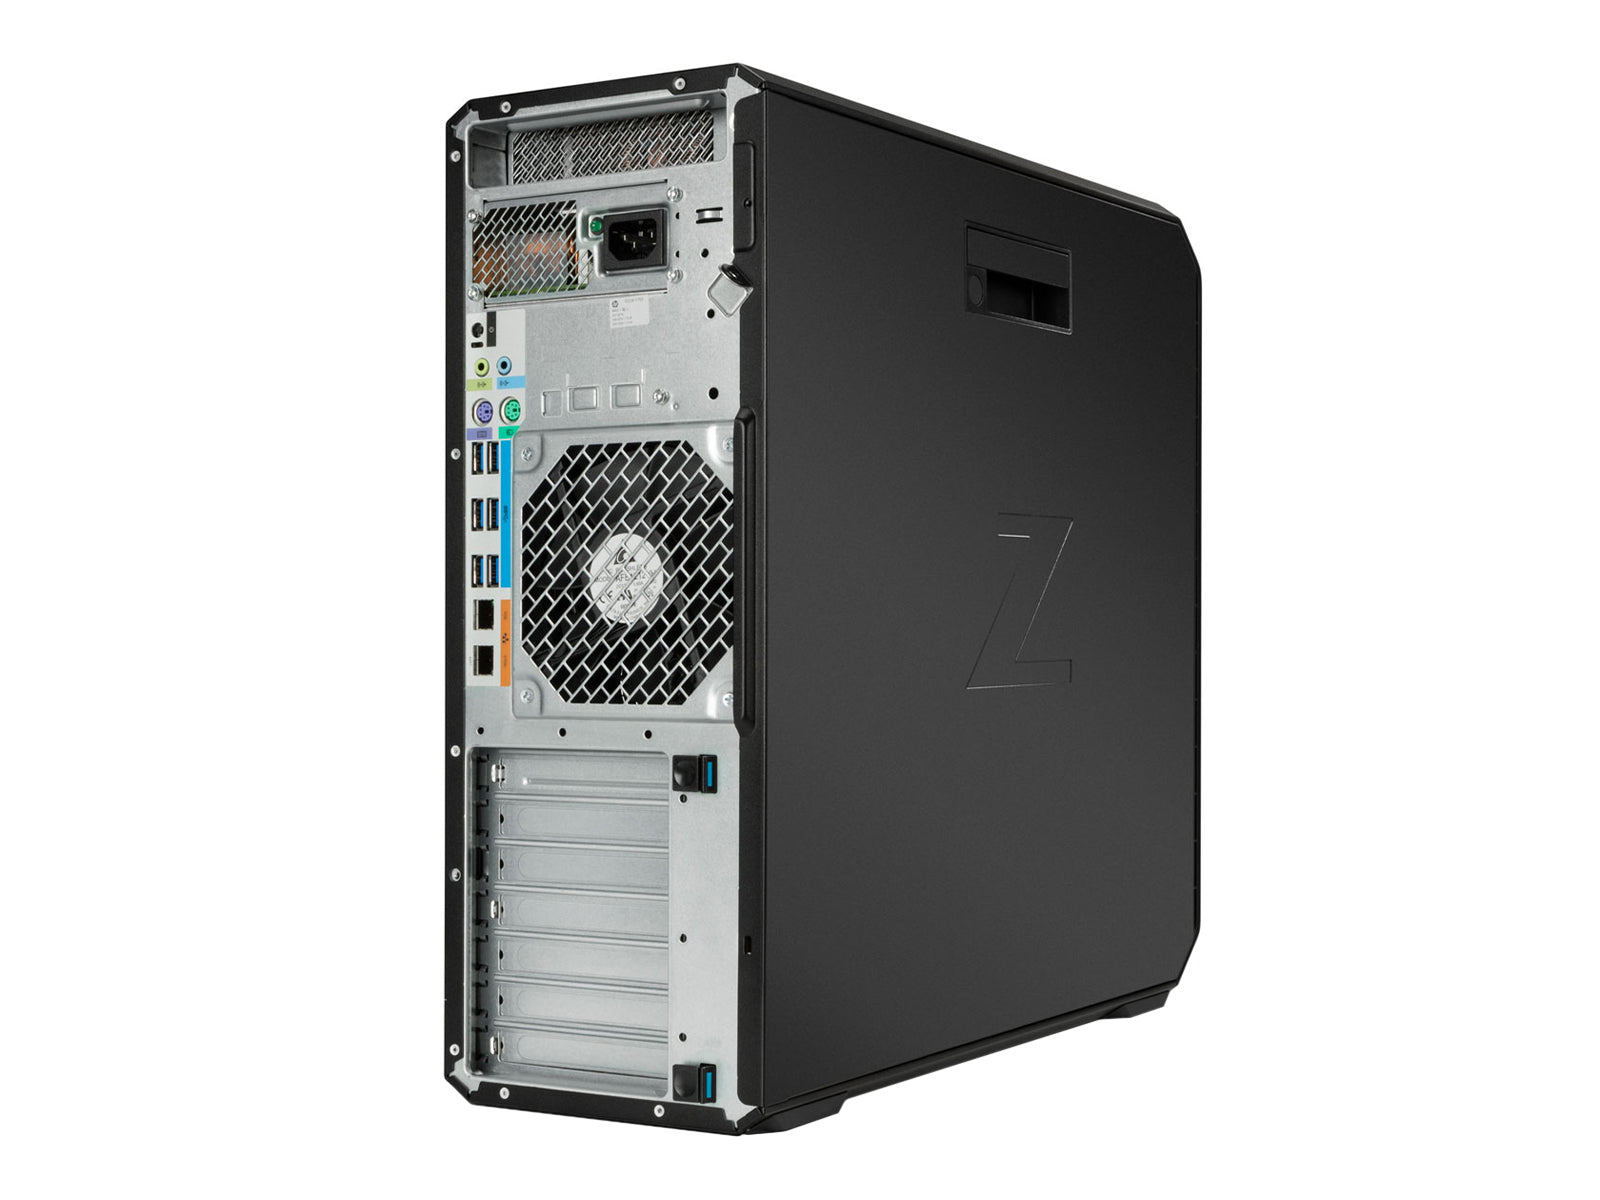 HP Z6 G4 |インテル Xeon プラチナ 8173M | 64GB DDR4 | 512GB NVMe M.2 SSD | MXRT 7600 | Win10